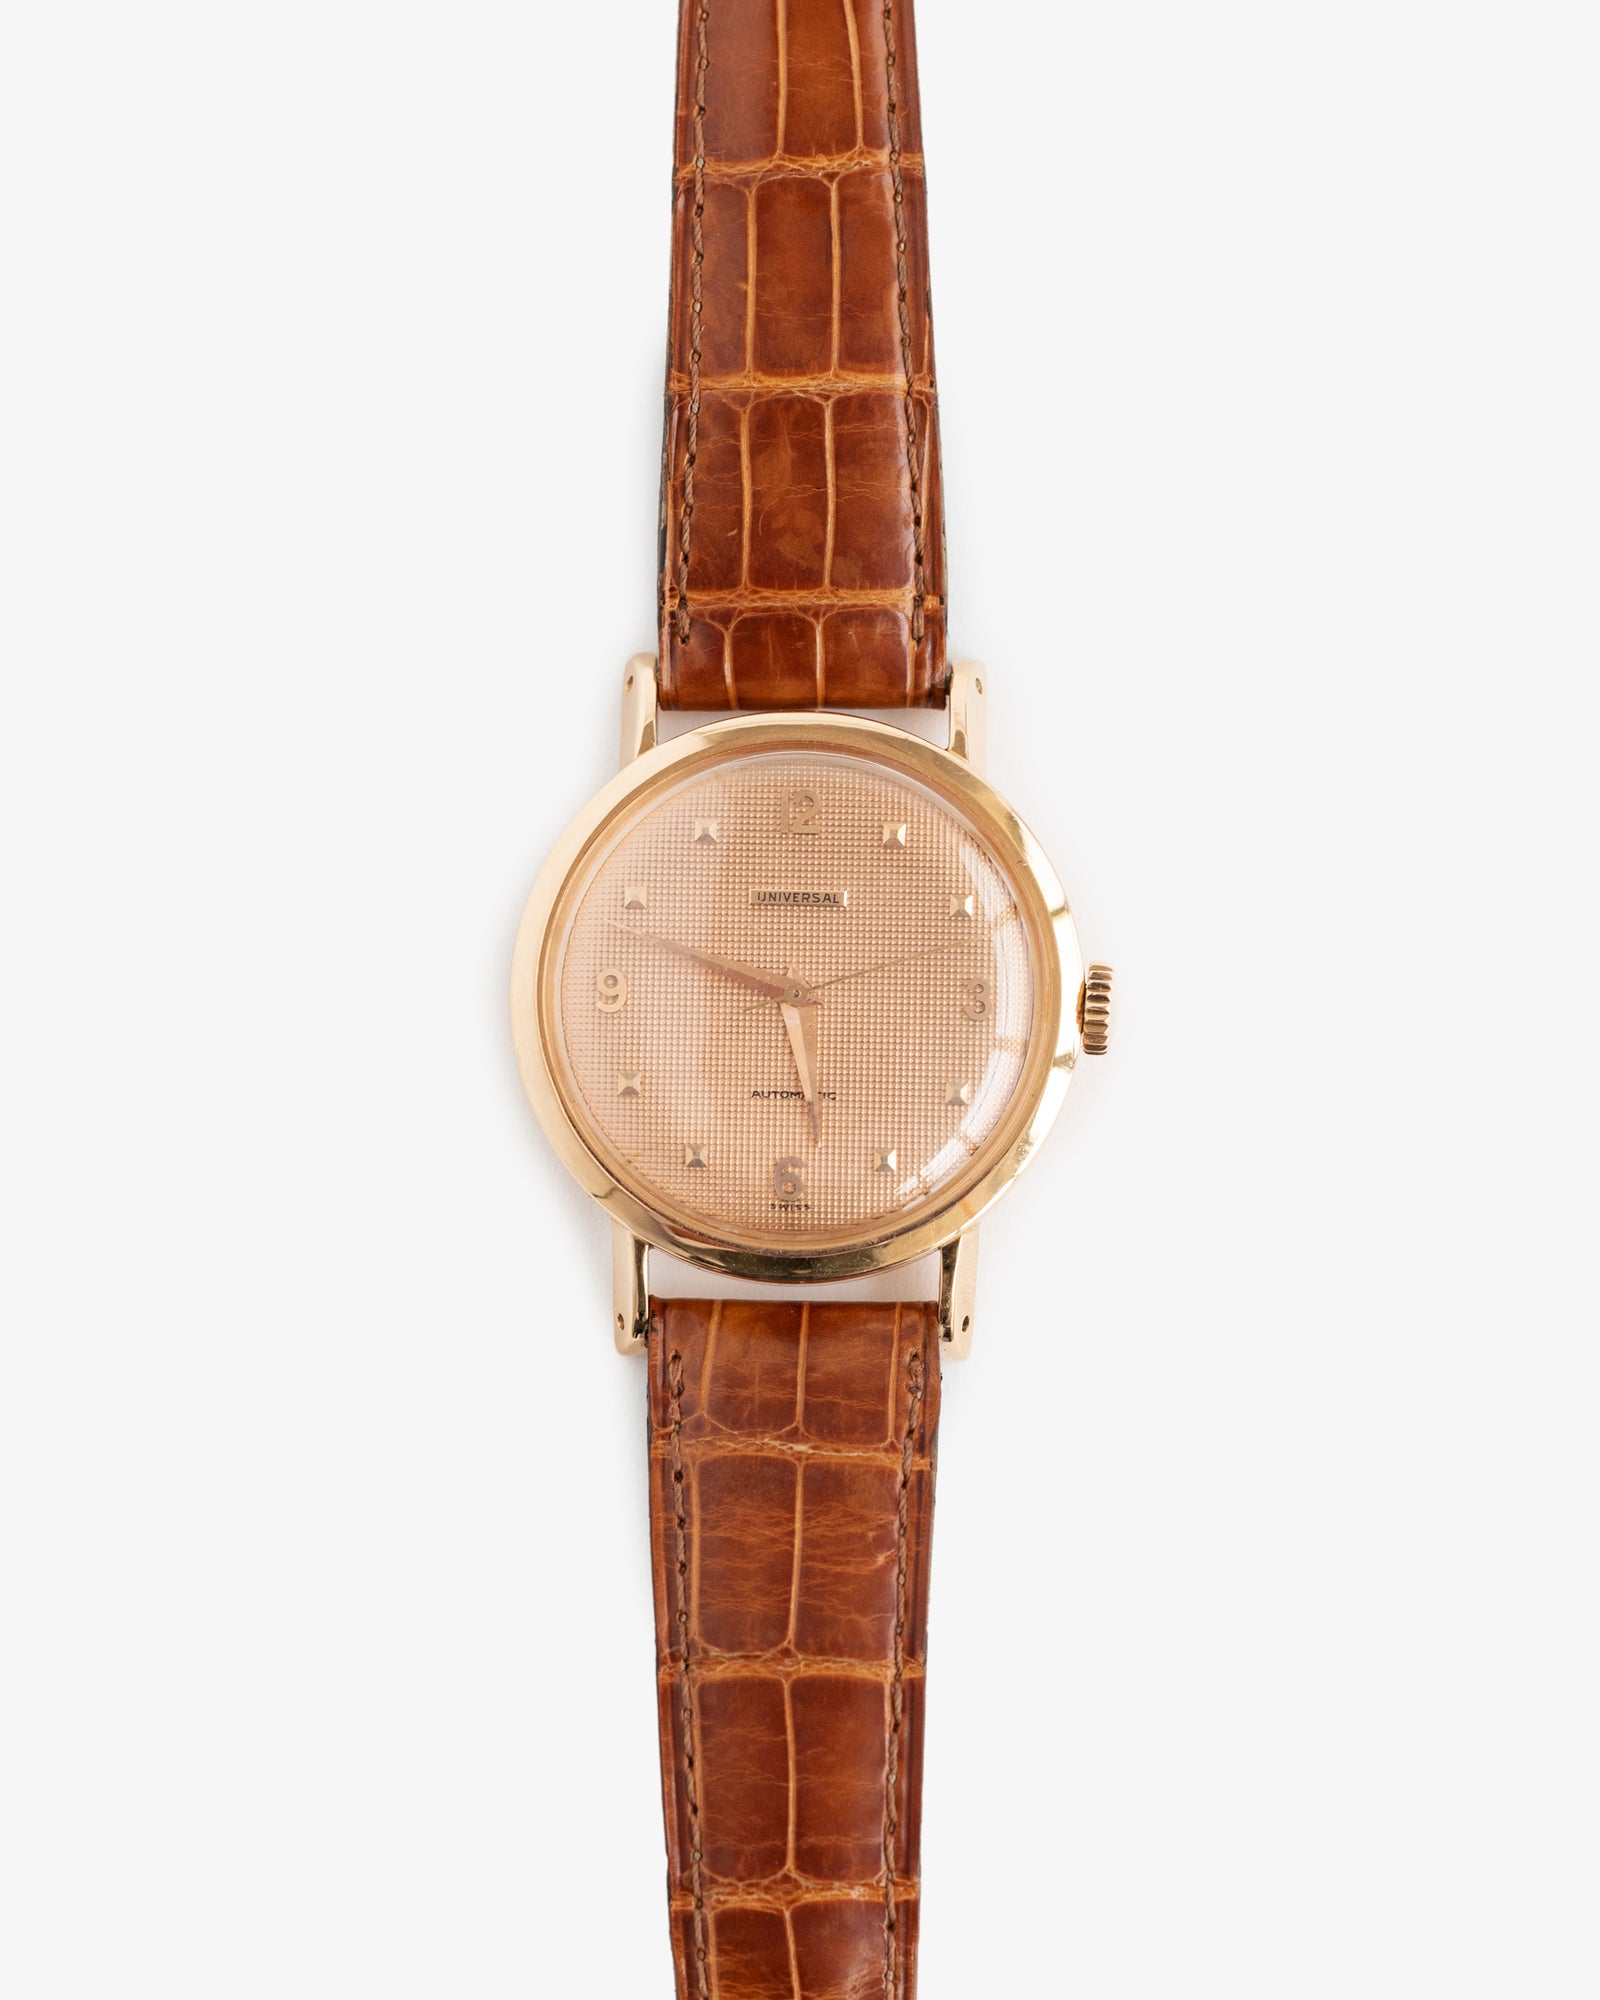 Vintage Universal Genève Automatic 14K Watch